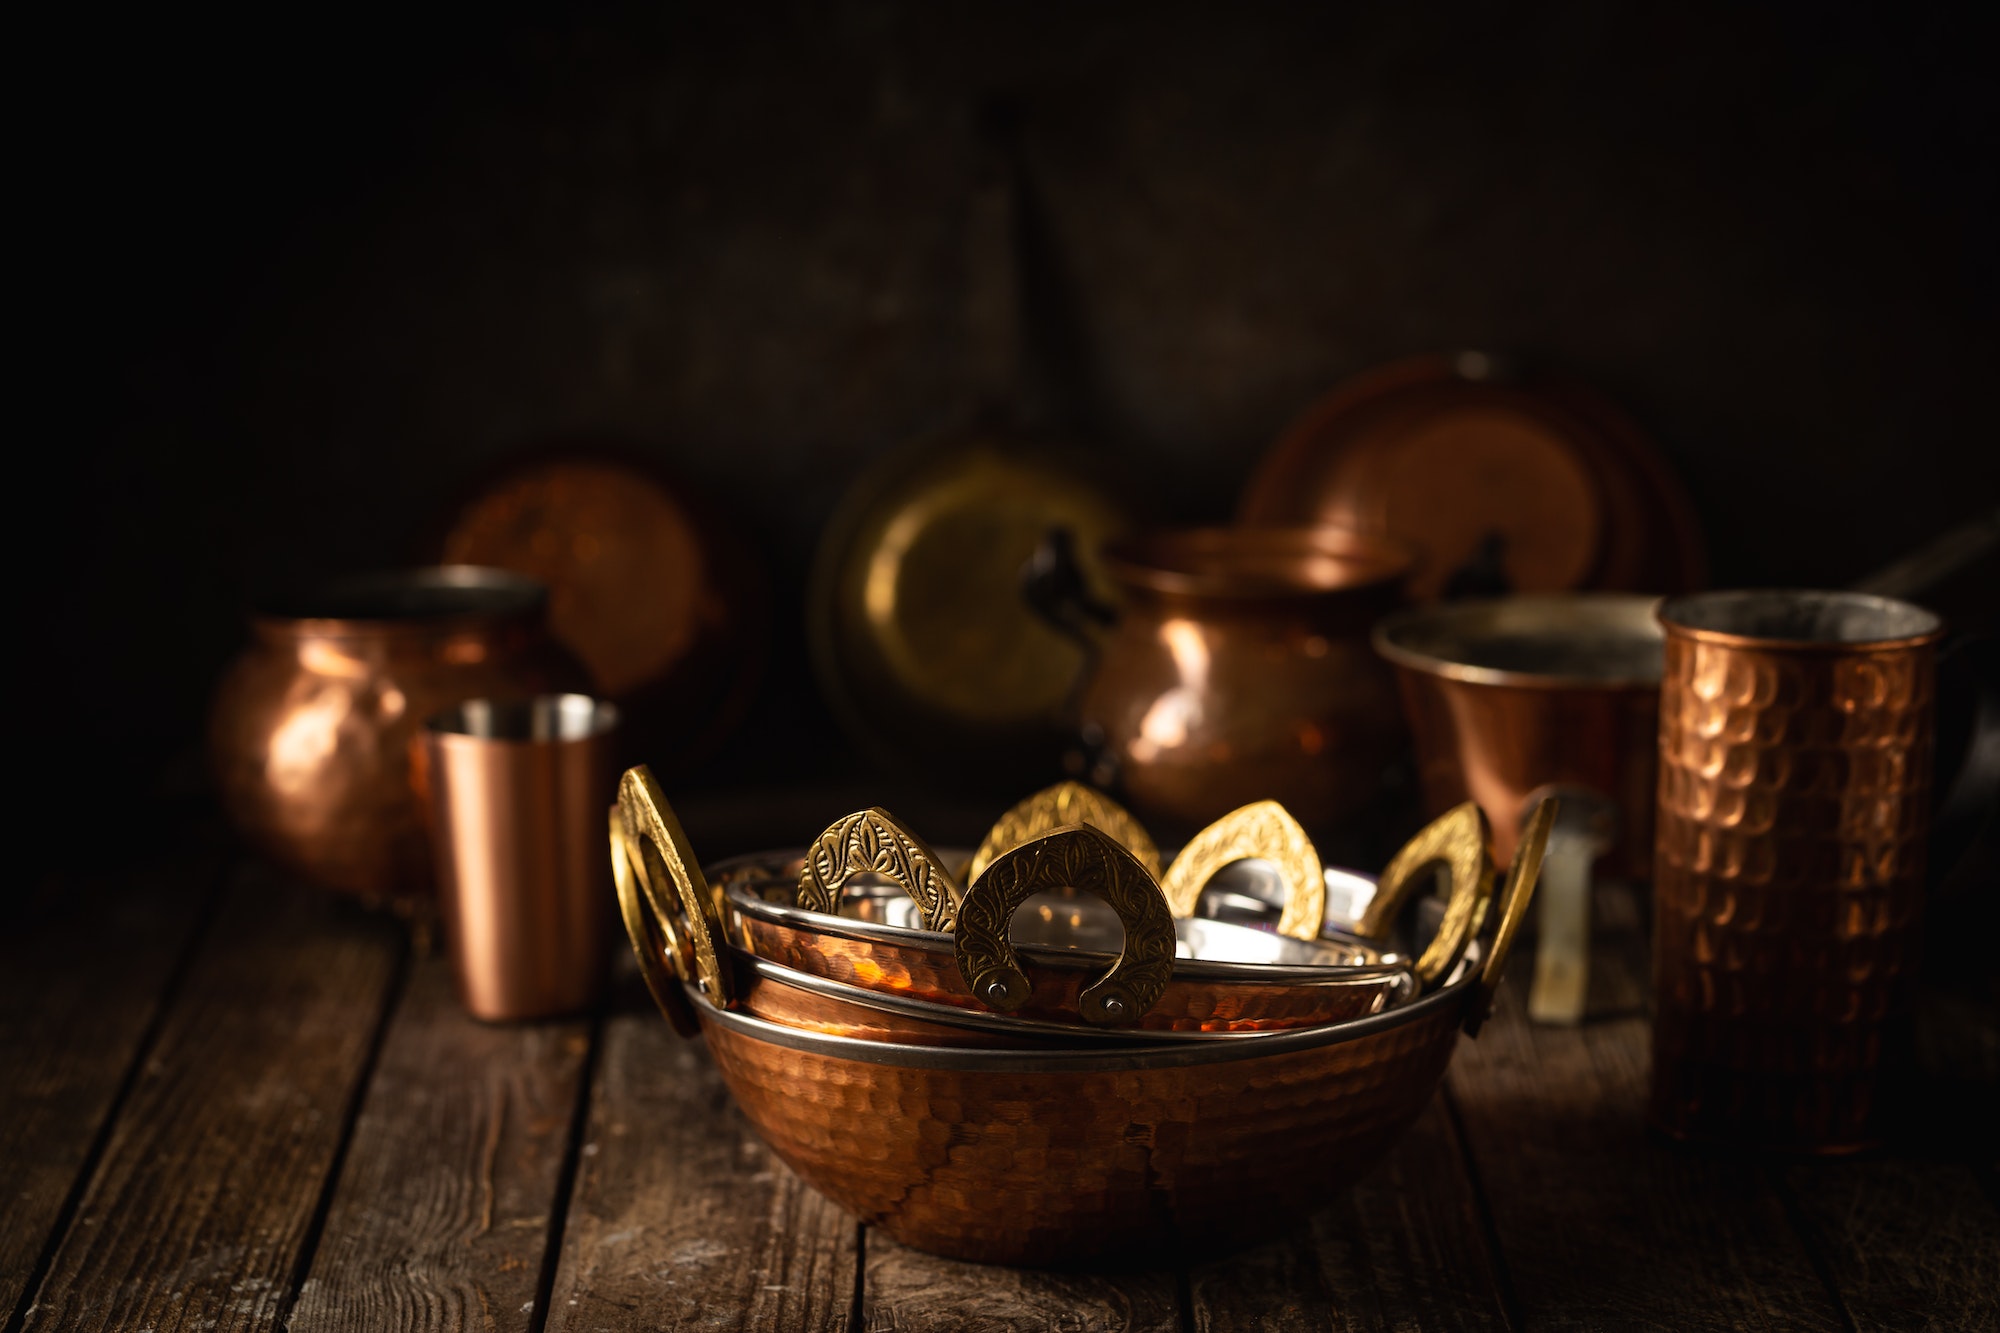 Vintage copper dishes